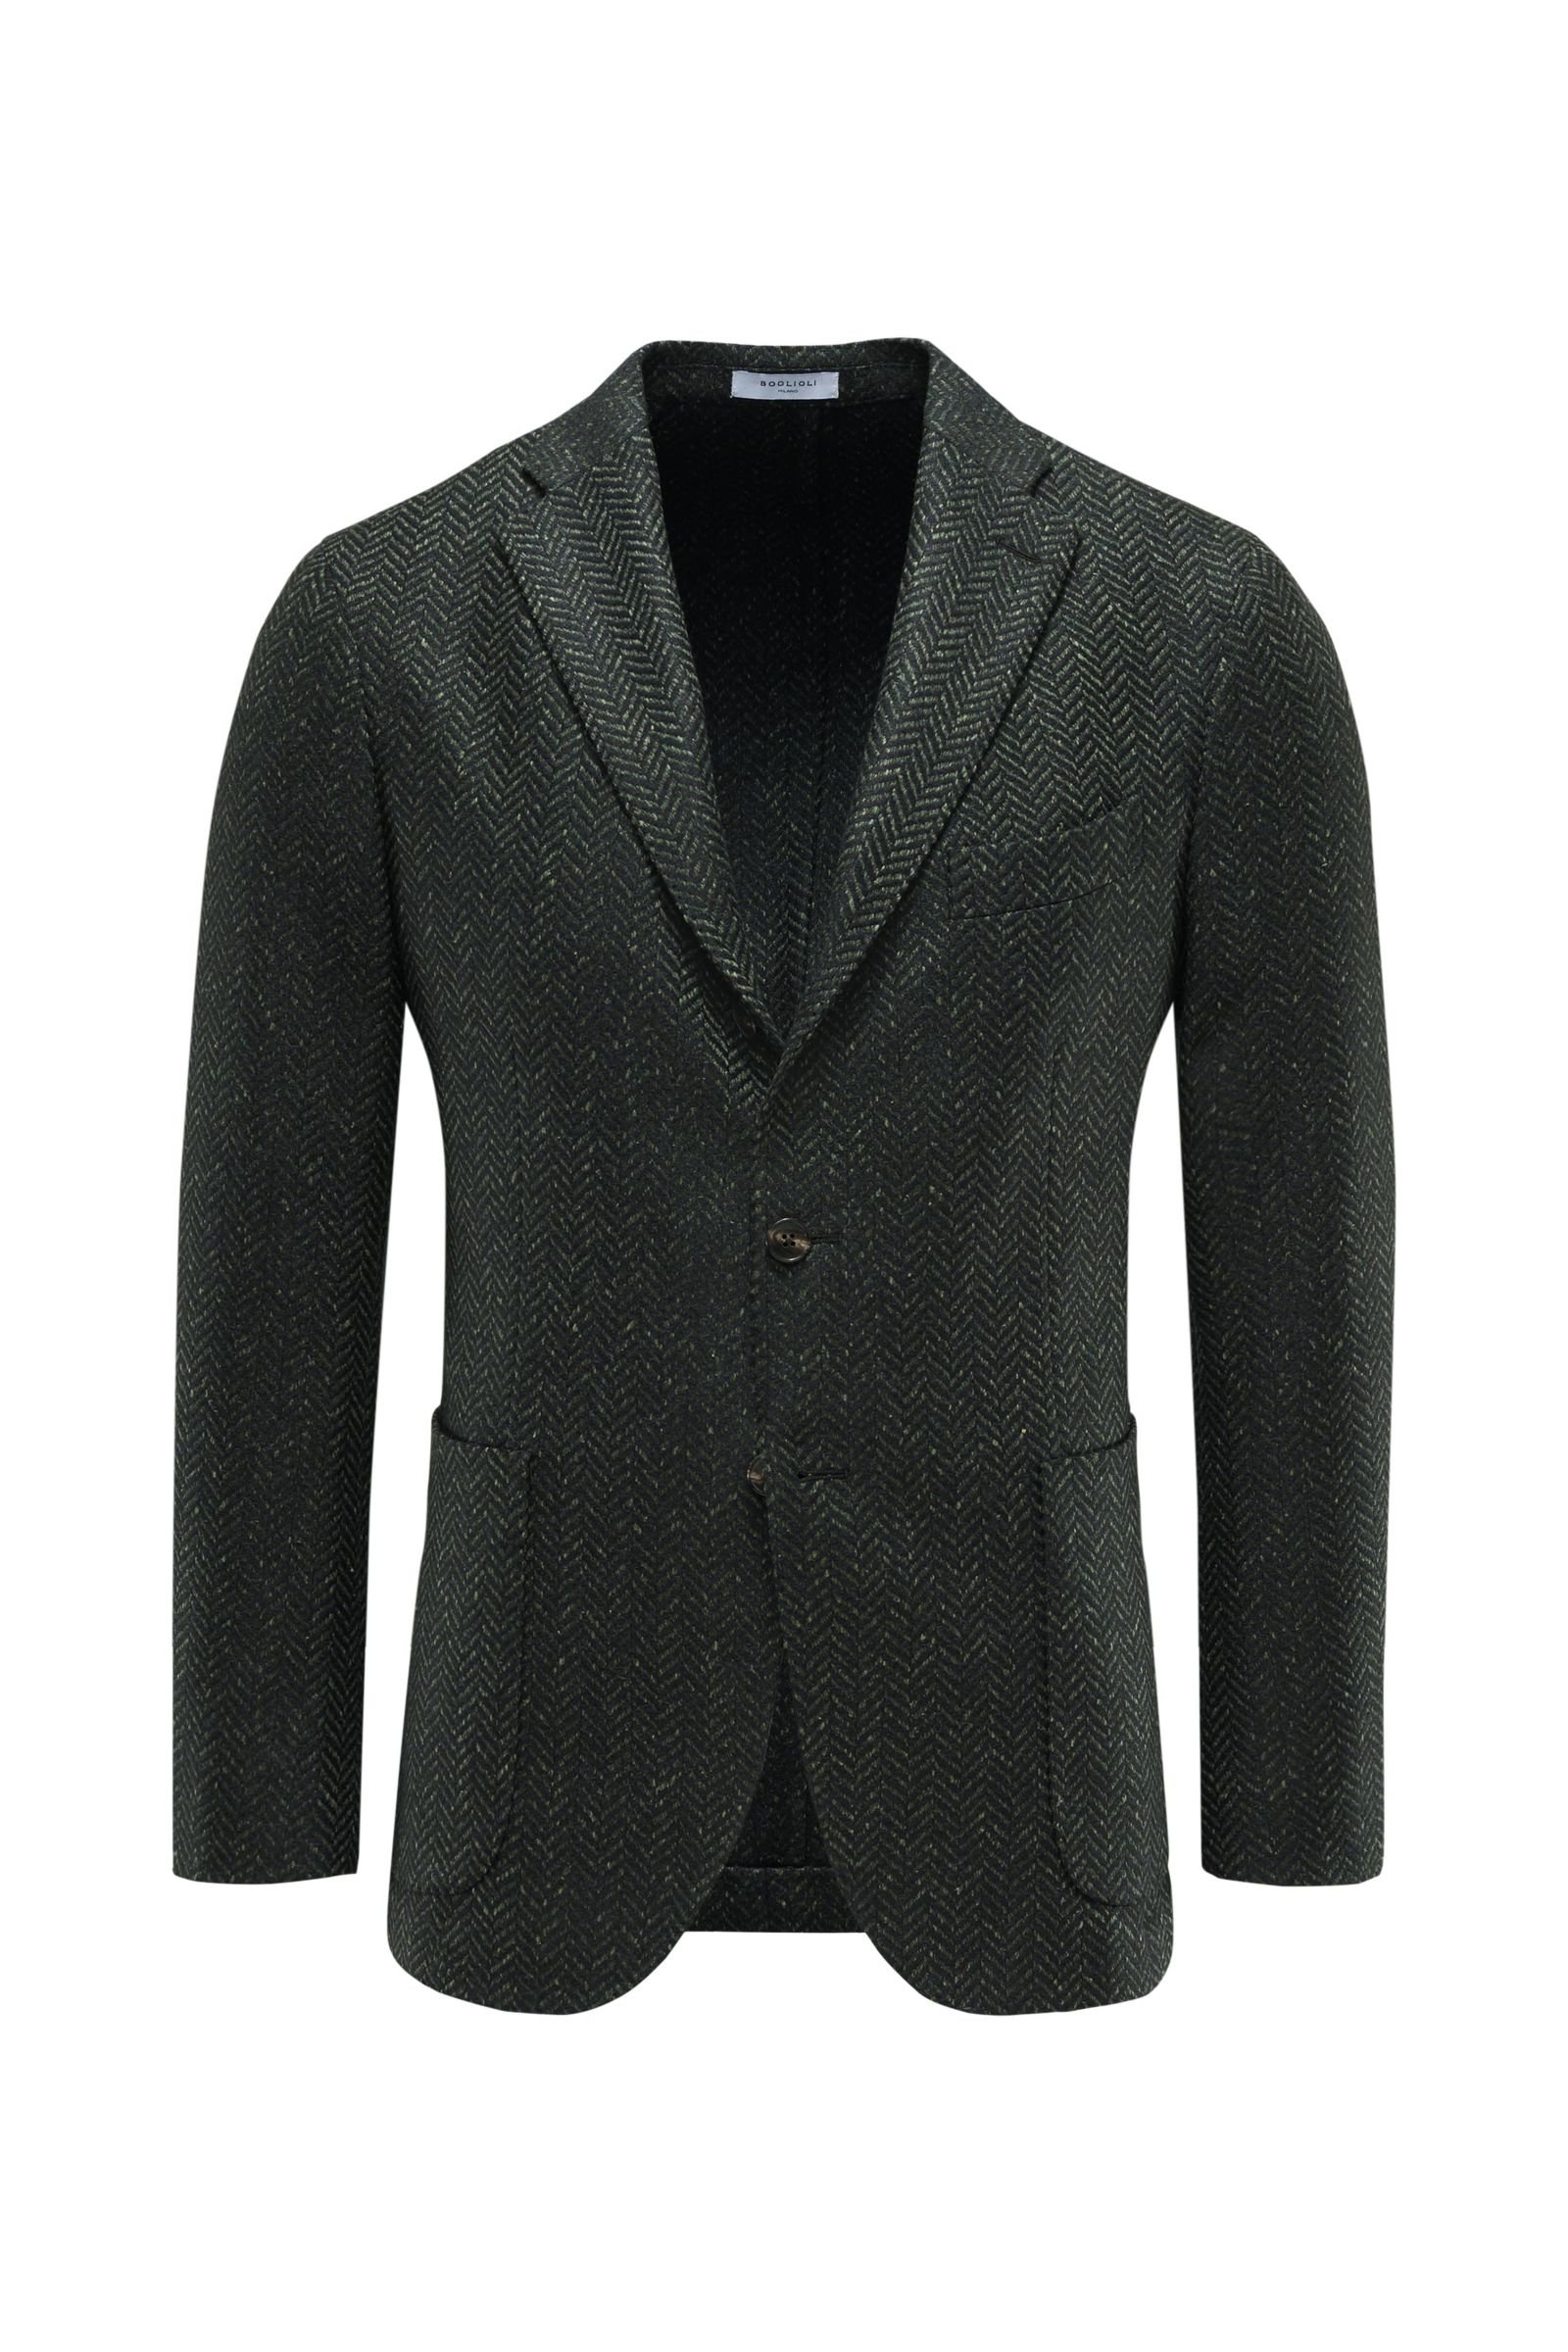 Smart-casual jacket dark green patterned